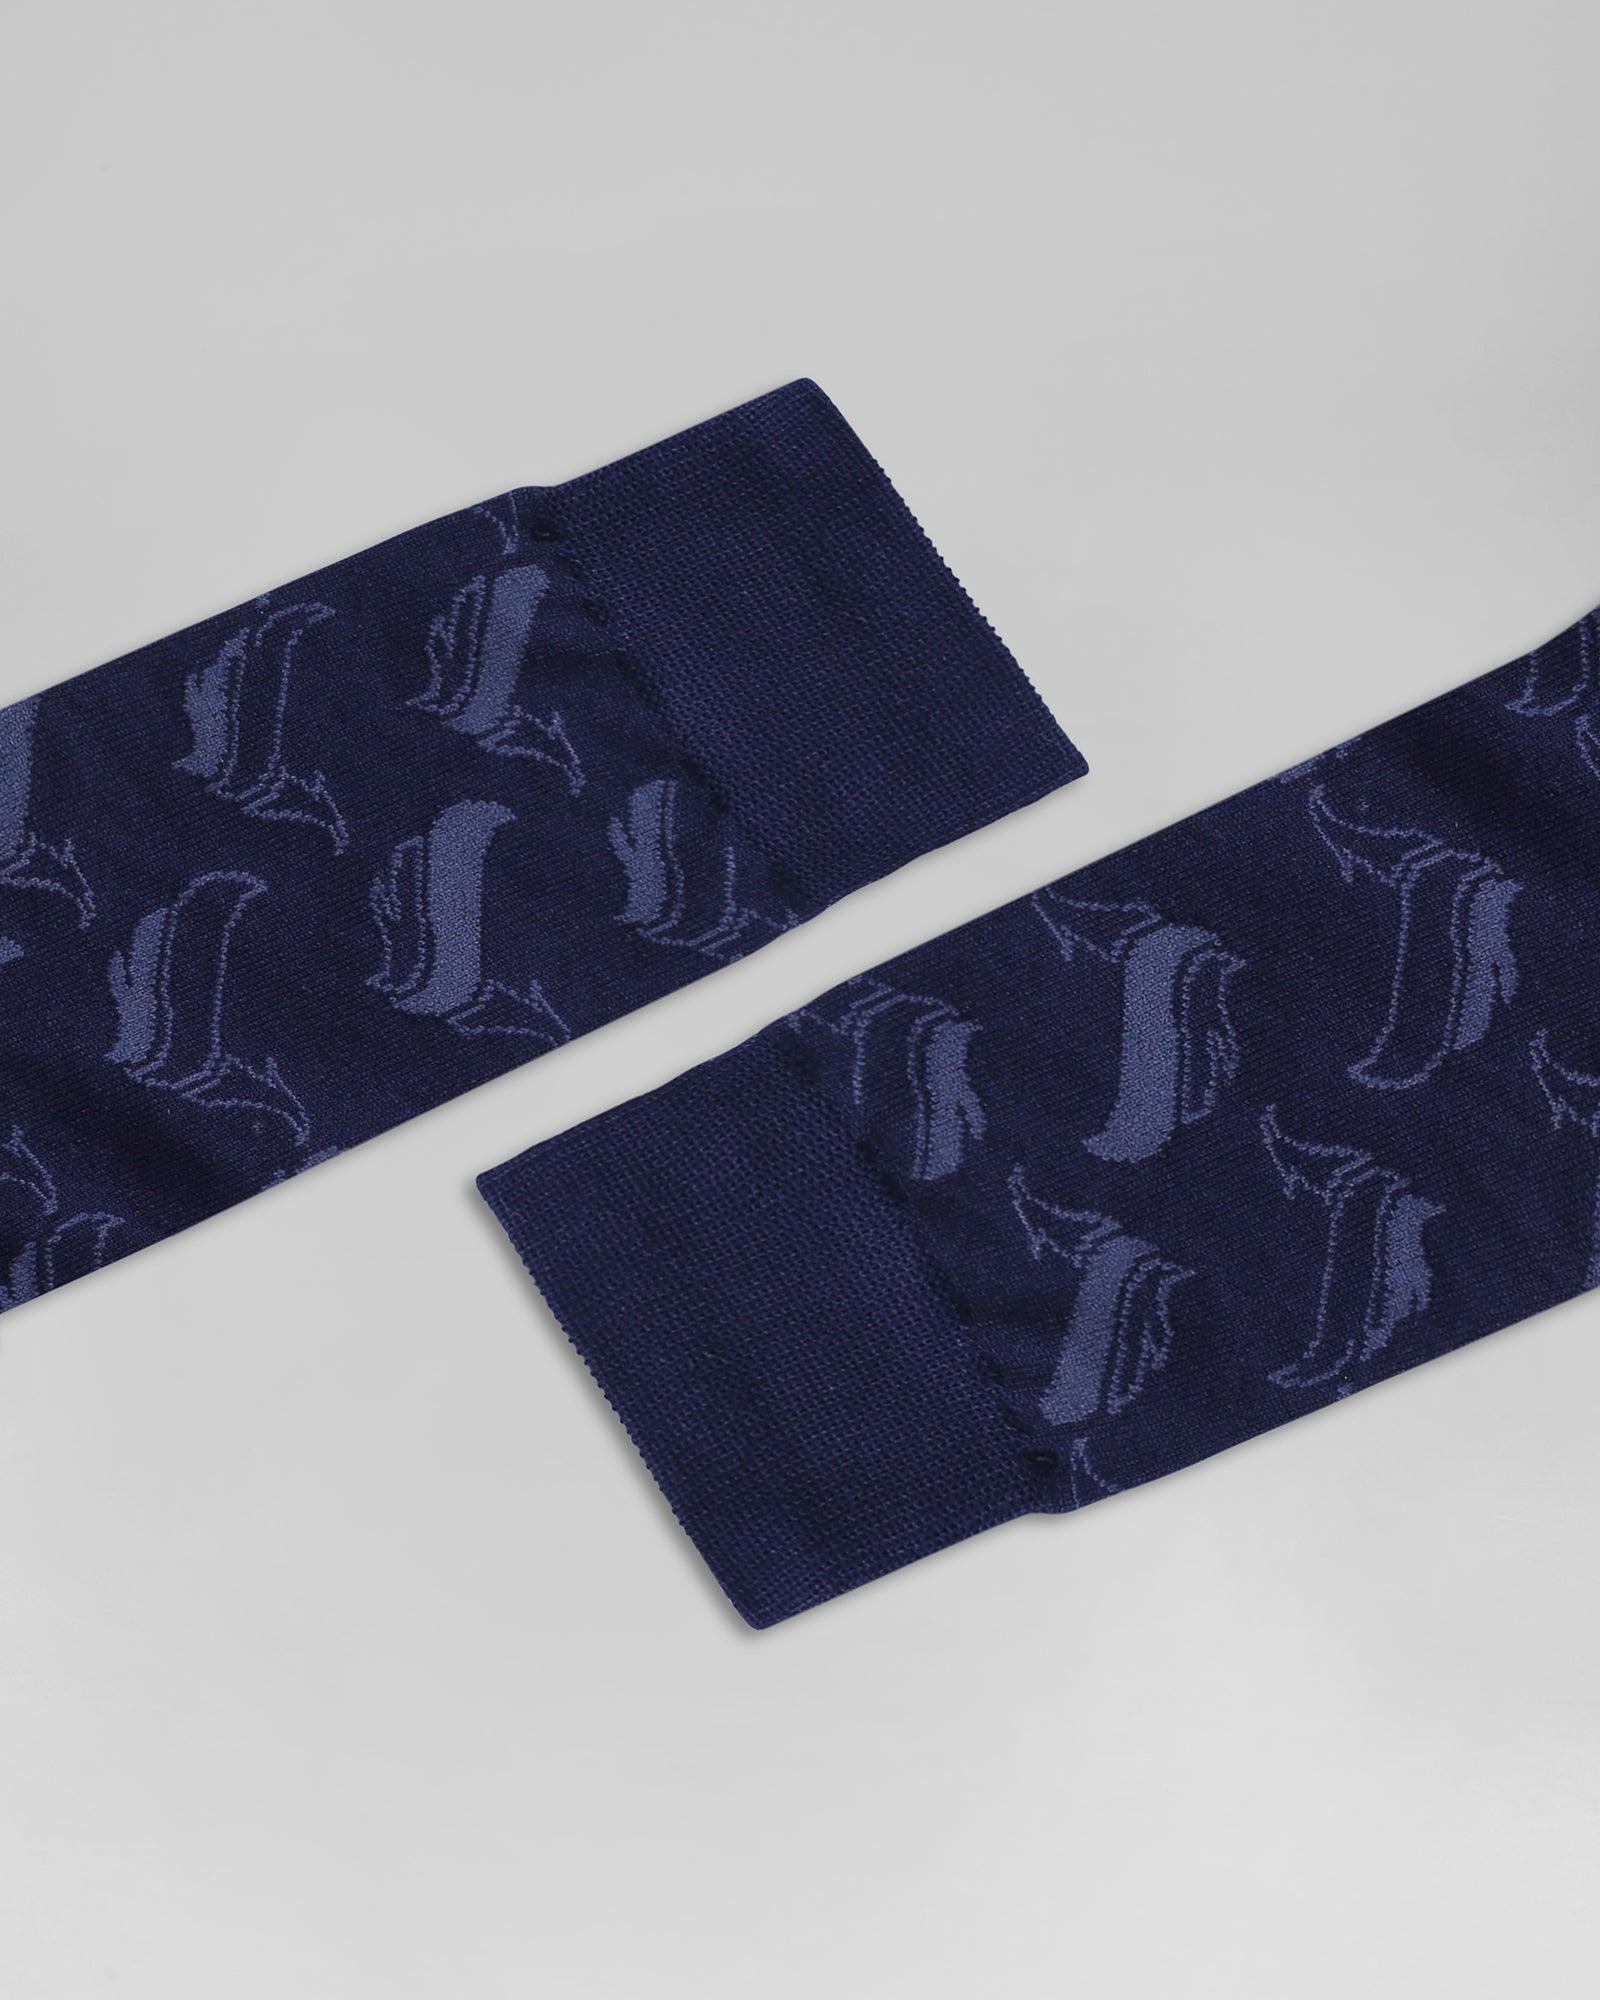 Cotton Dark Navy Printed Socks - Jacquard